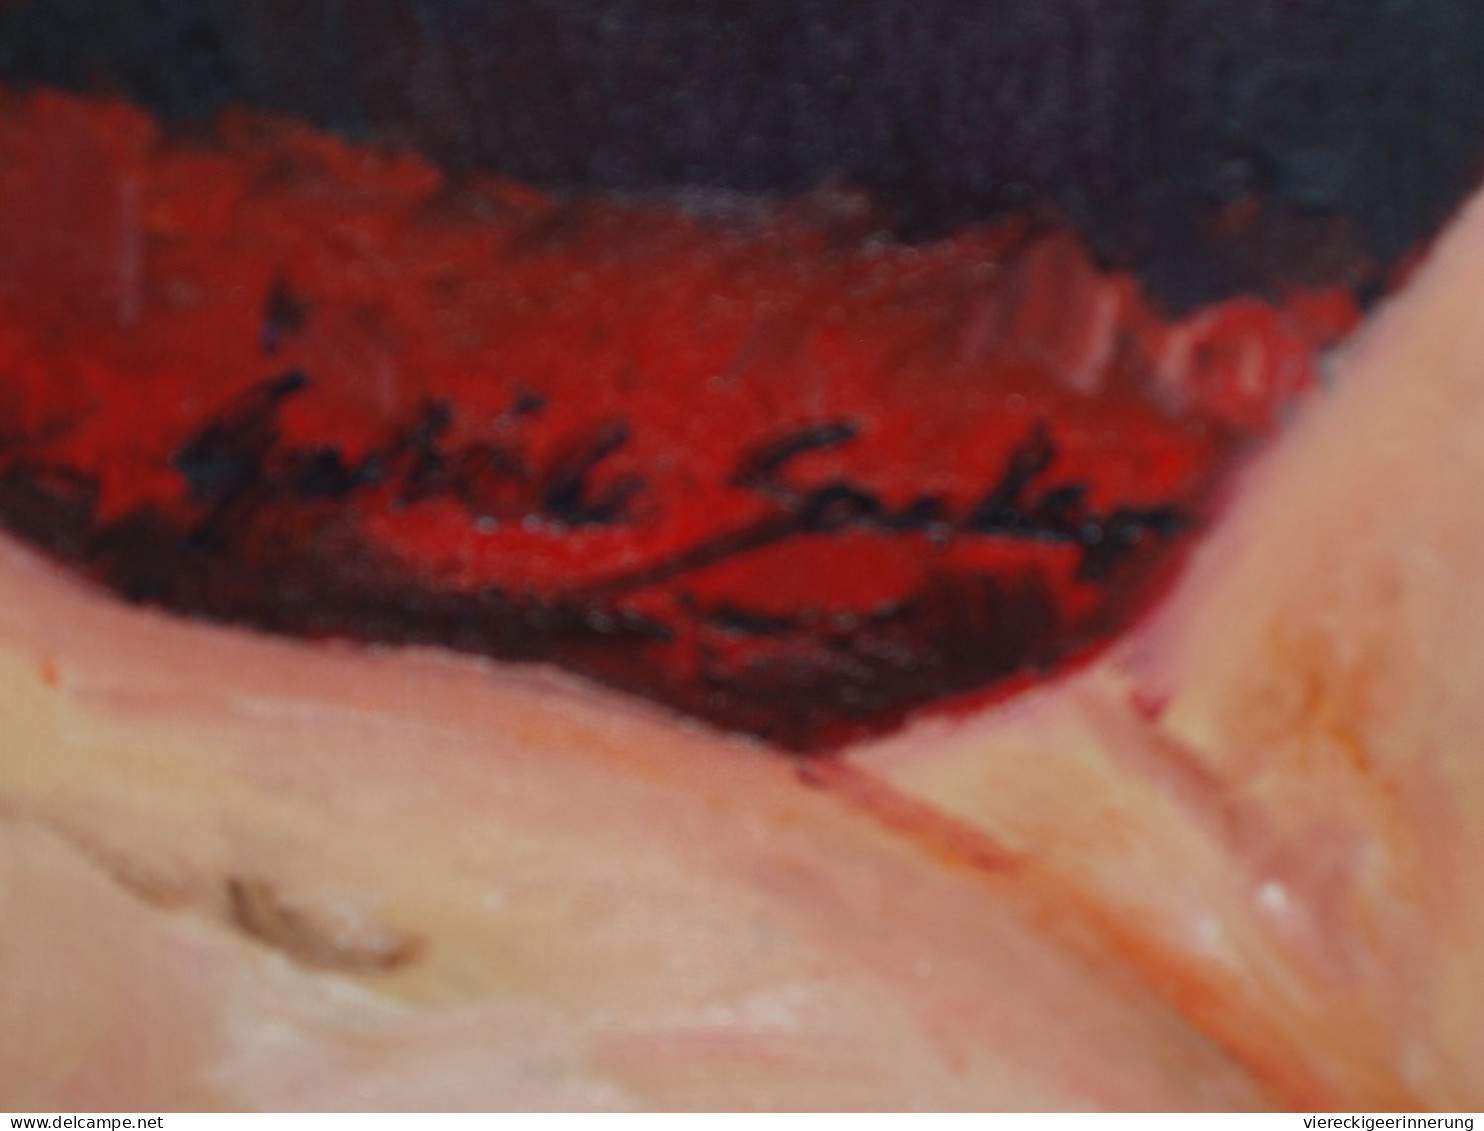 ! Ölgemälde Frauenakt Nach Amedeo Modigliani , Oil Painting, Famous Painter - Olii